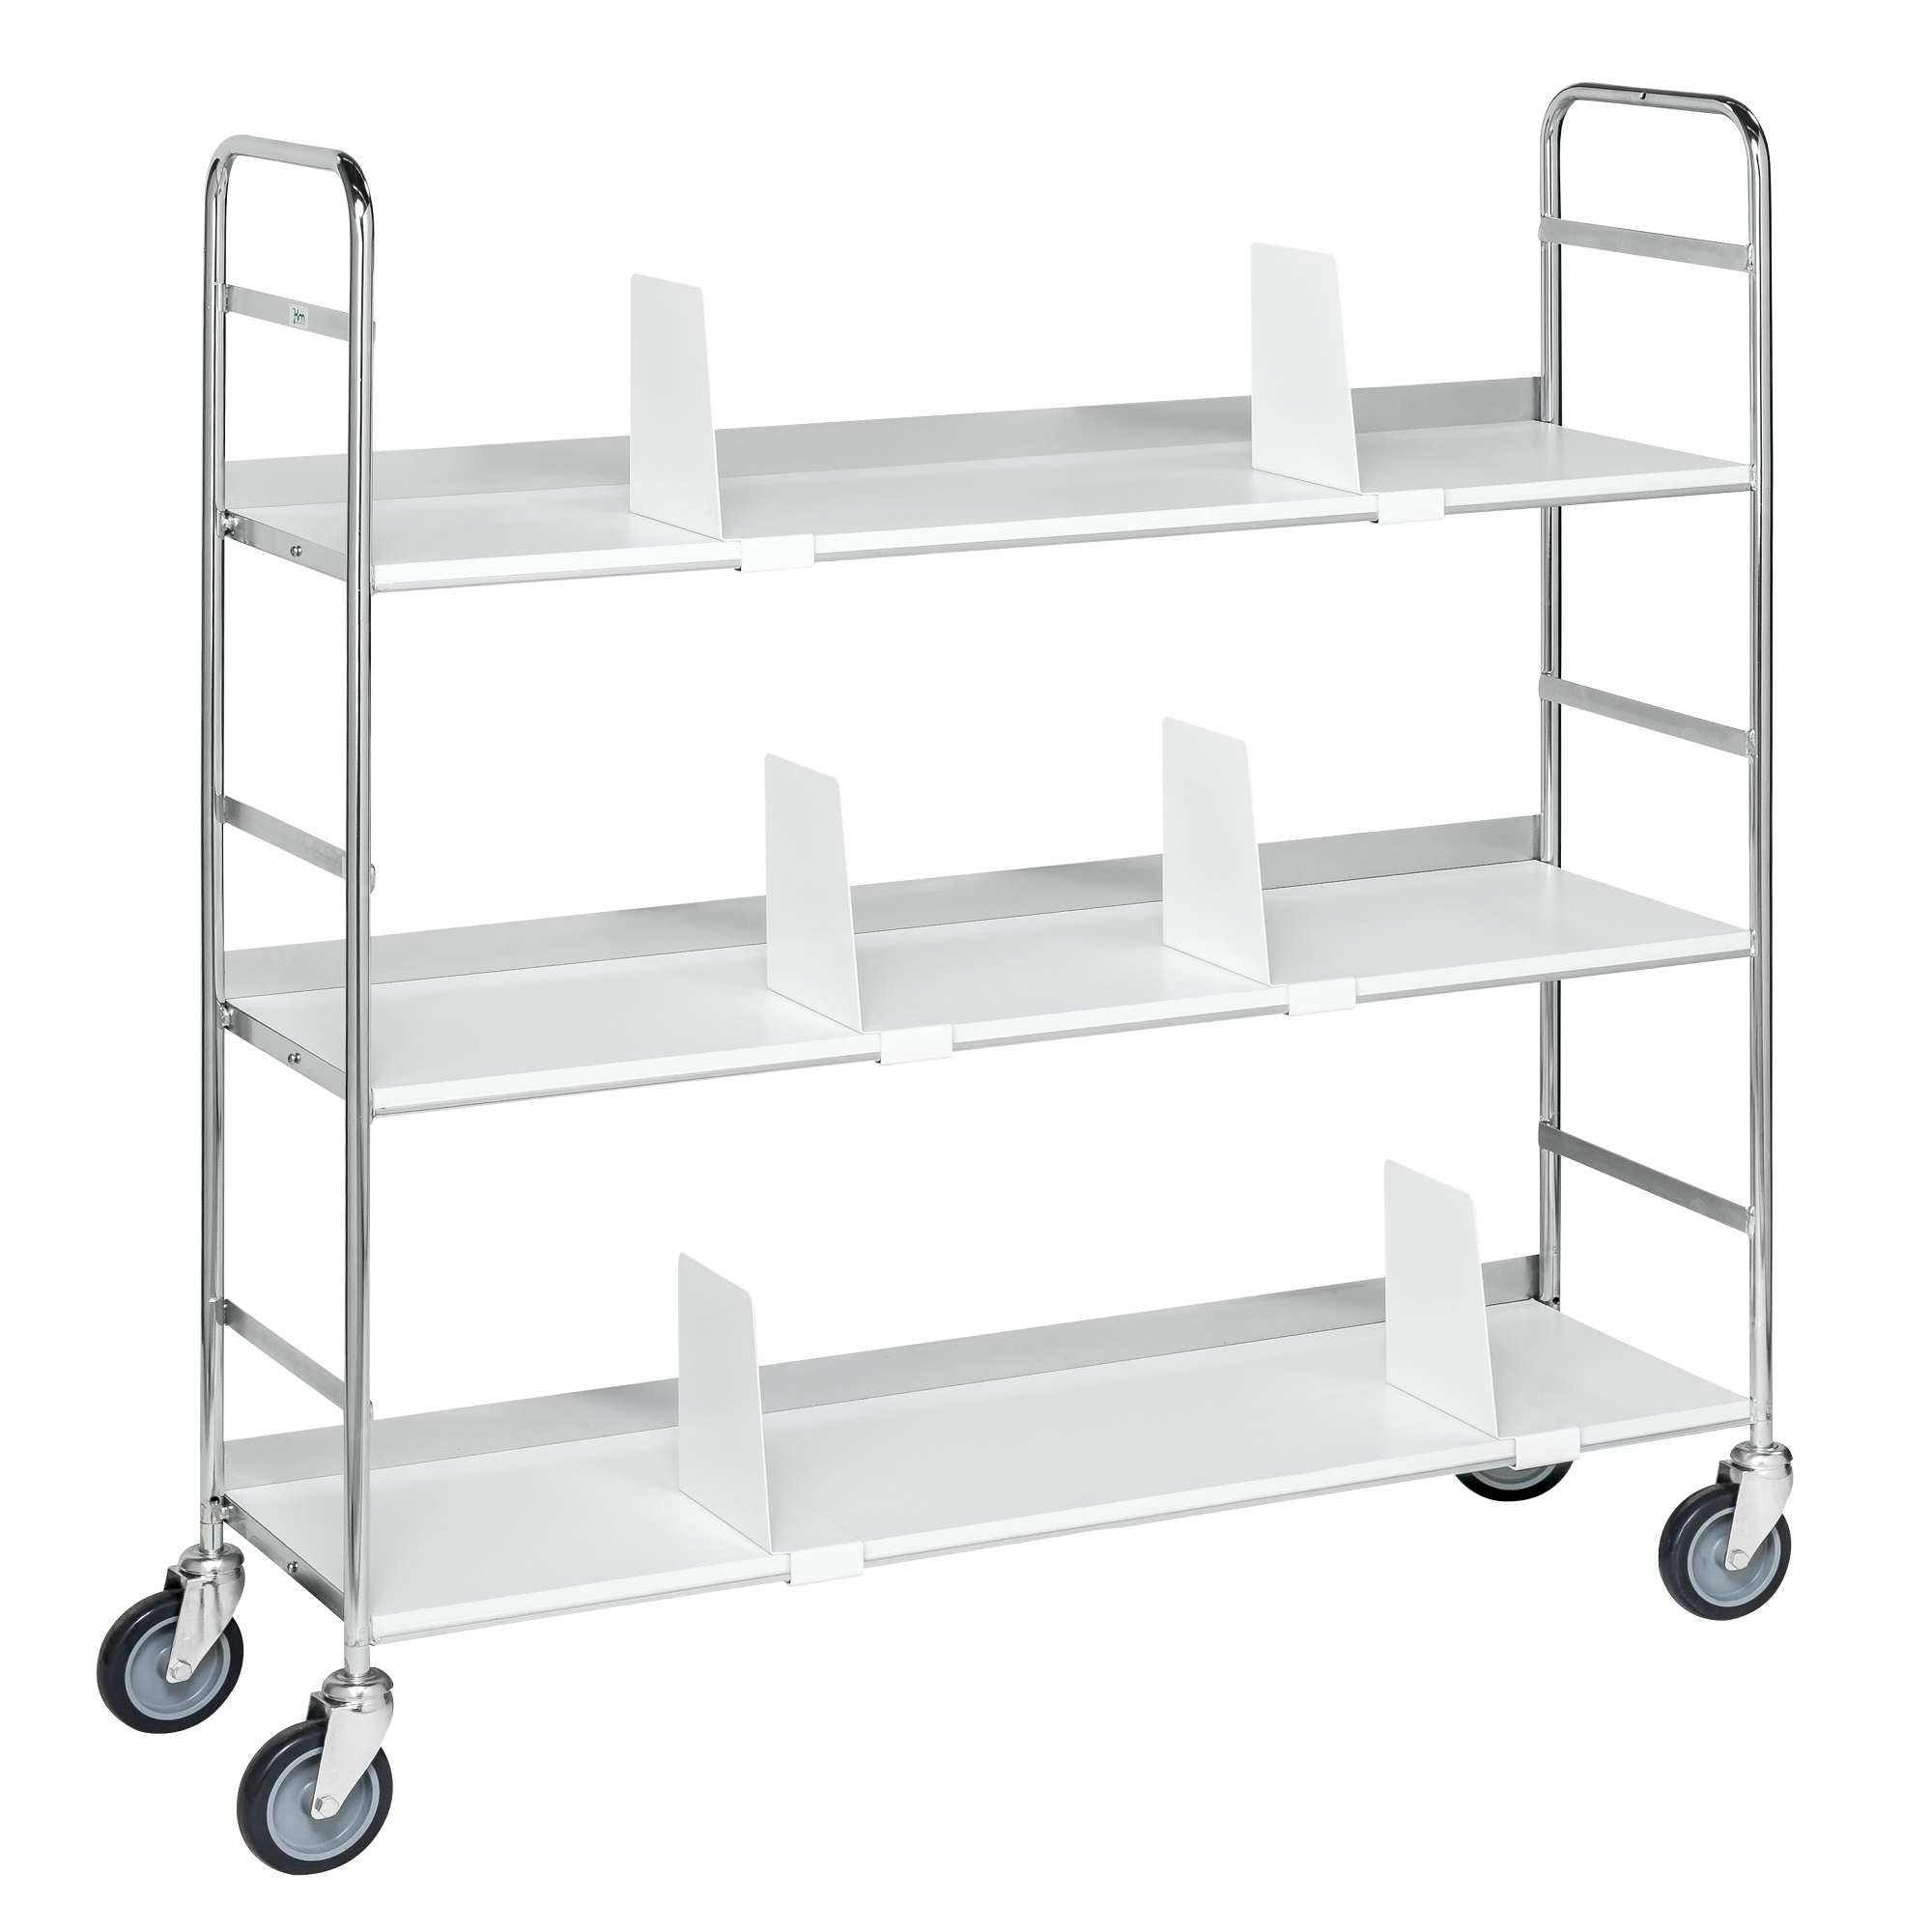 Moving shelf, Moveable shelf trolley LxWxH (mm) 1000 x 290 x 1140 - Kongamek